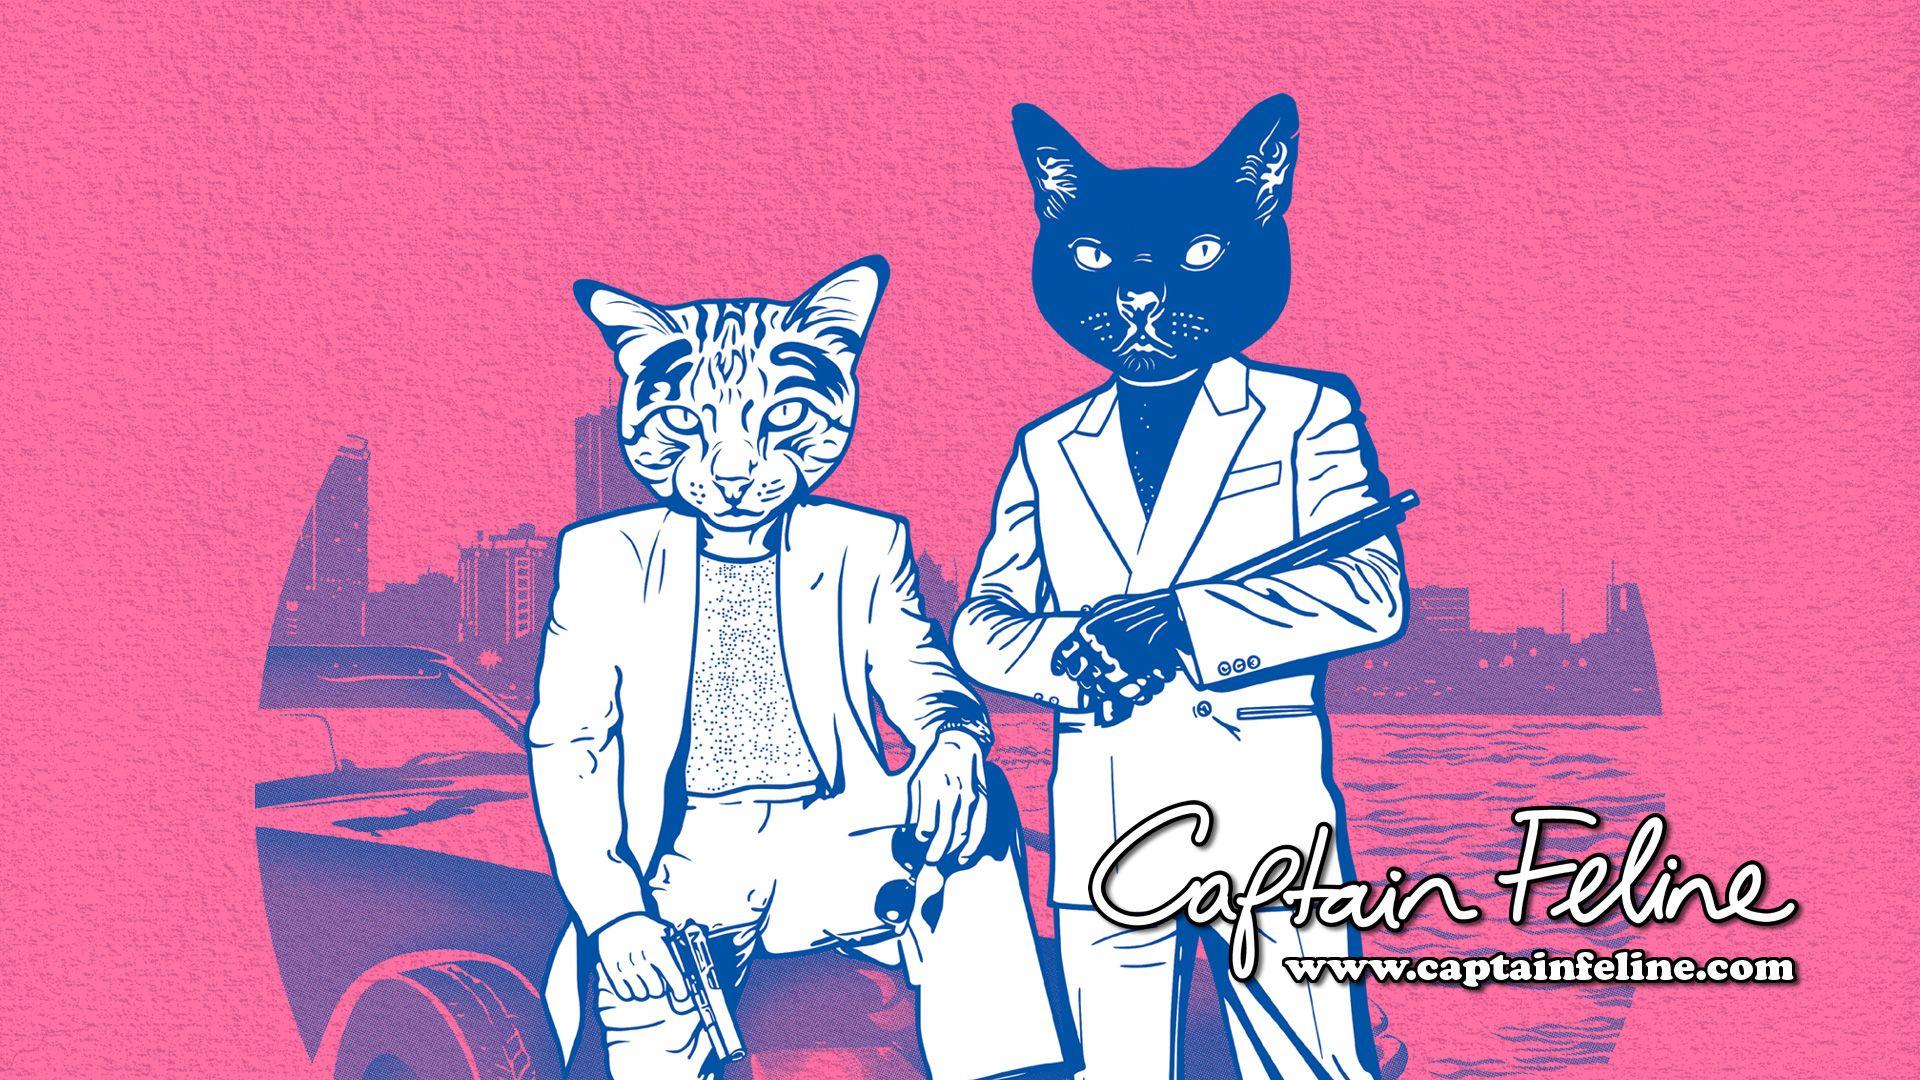 Miami Vice. Captain Feline T Shirts Pop Culture With Cats